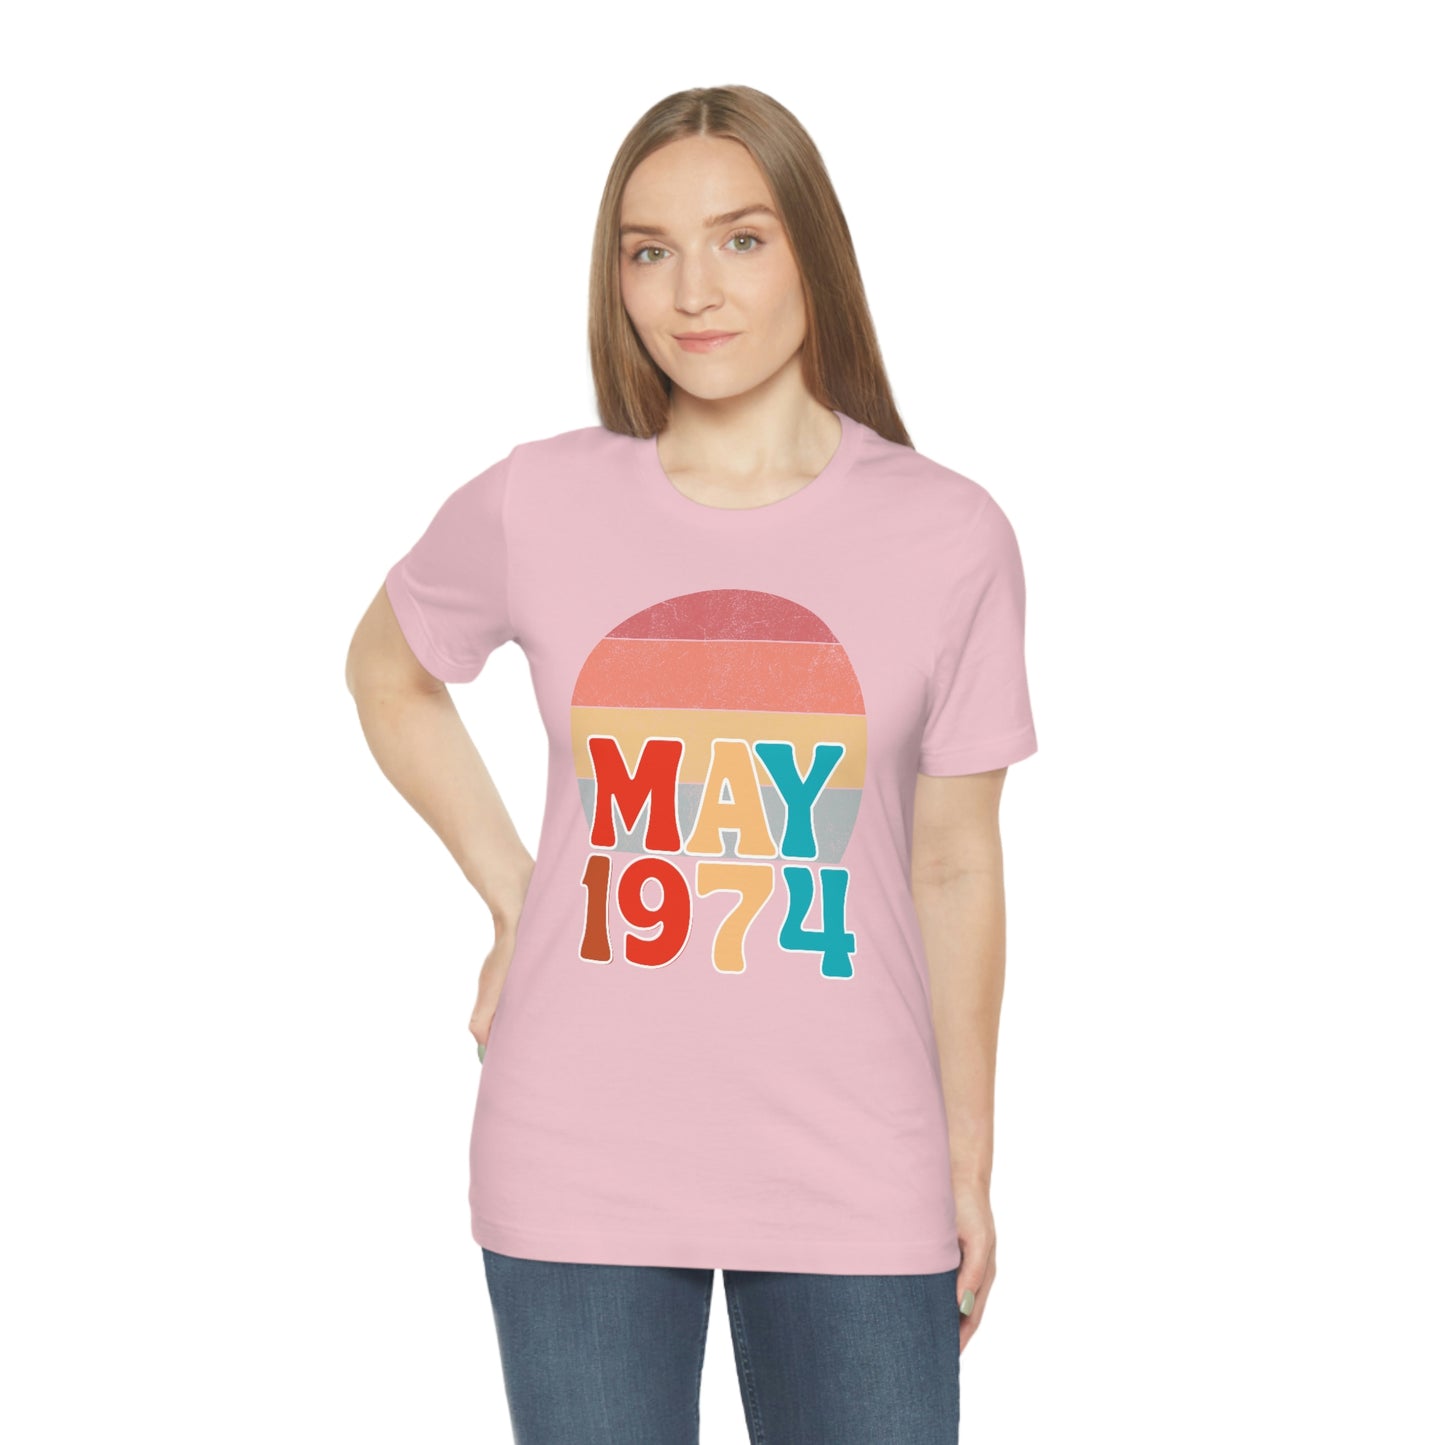 49th Birthday Shirt, 1974 Shirt, 49th Birthday Tee, Vintage 1974 Shirt, 49th Birthday Gifts, 1974 Birthday Shirt, 49th Birthday Gift